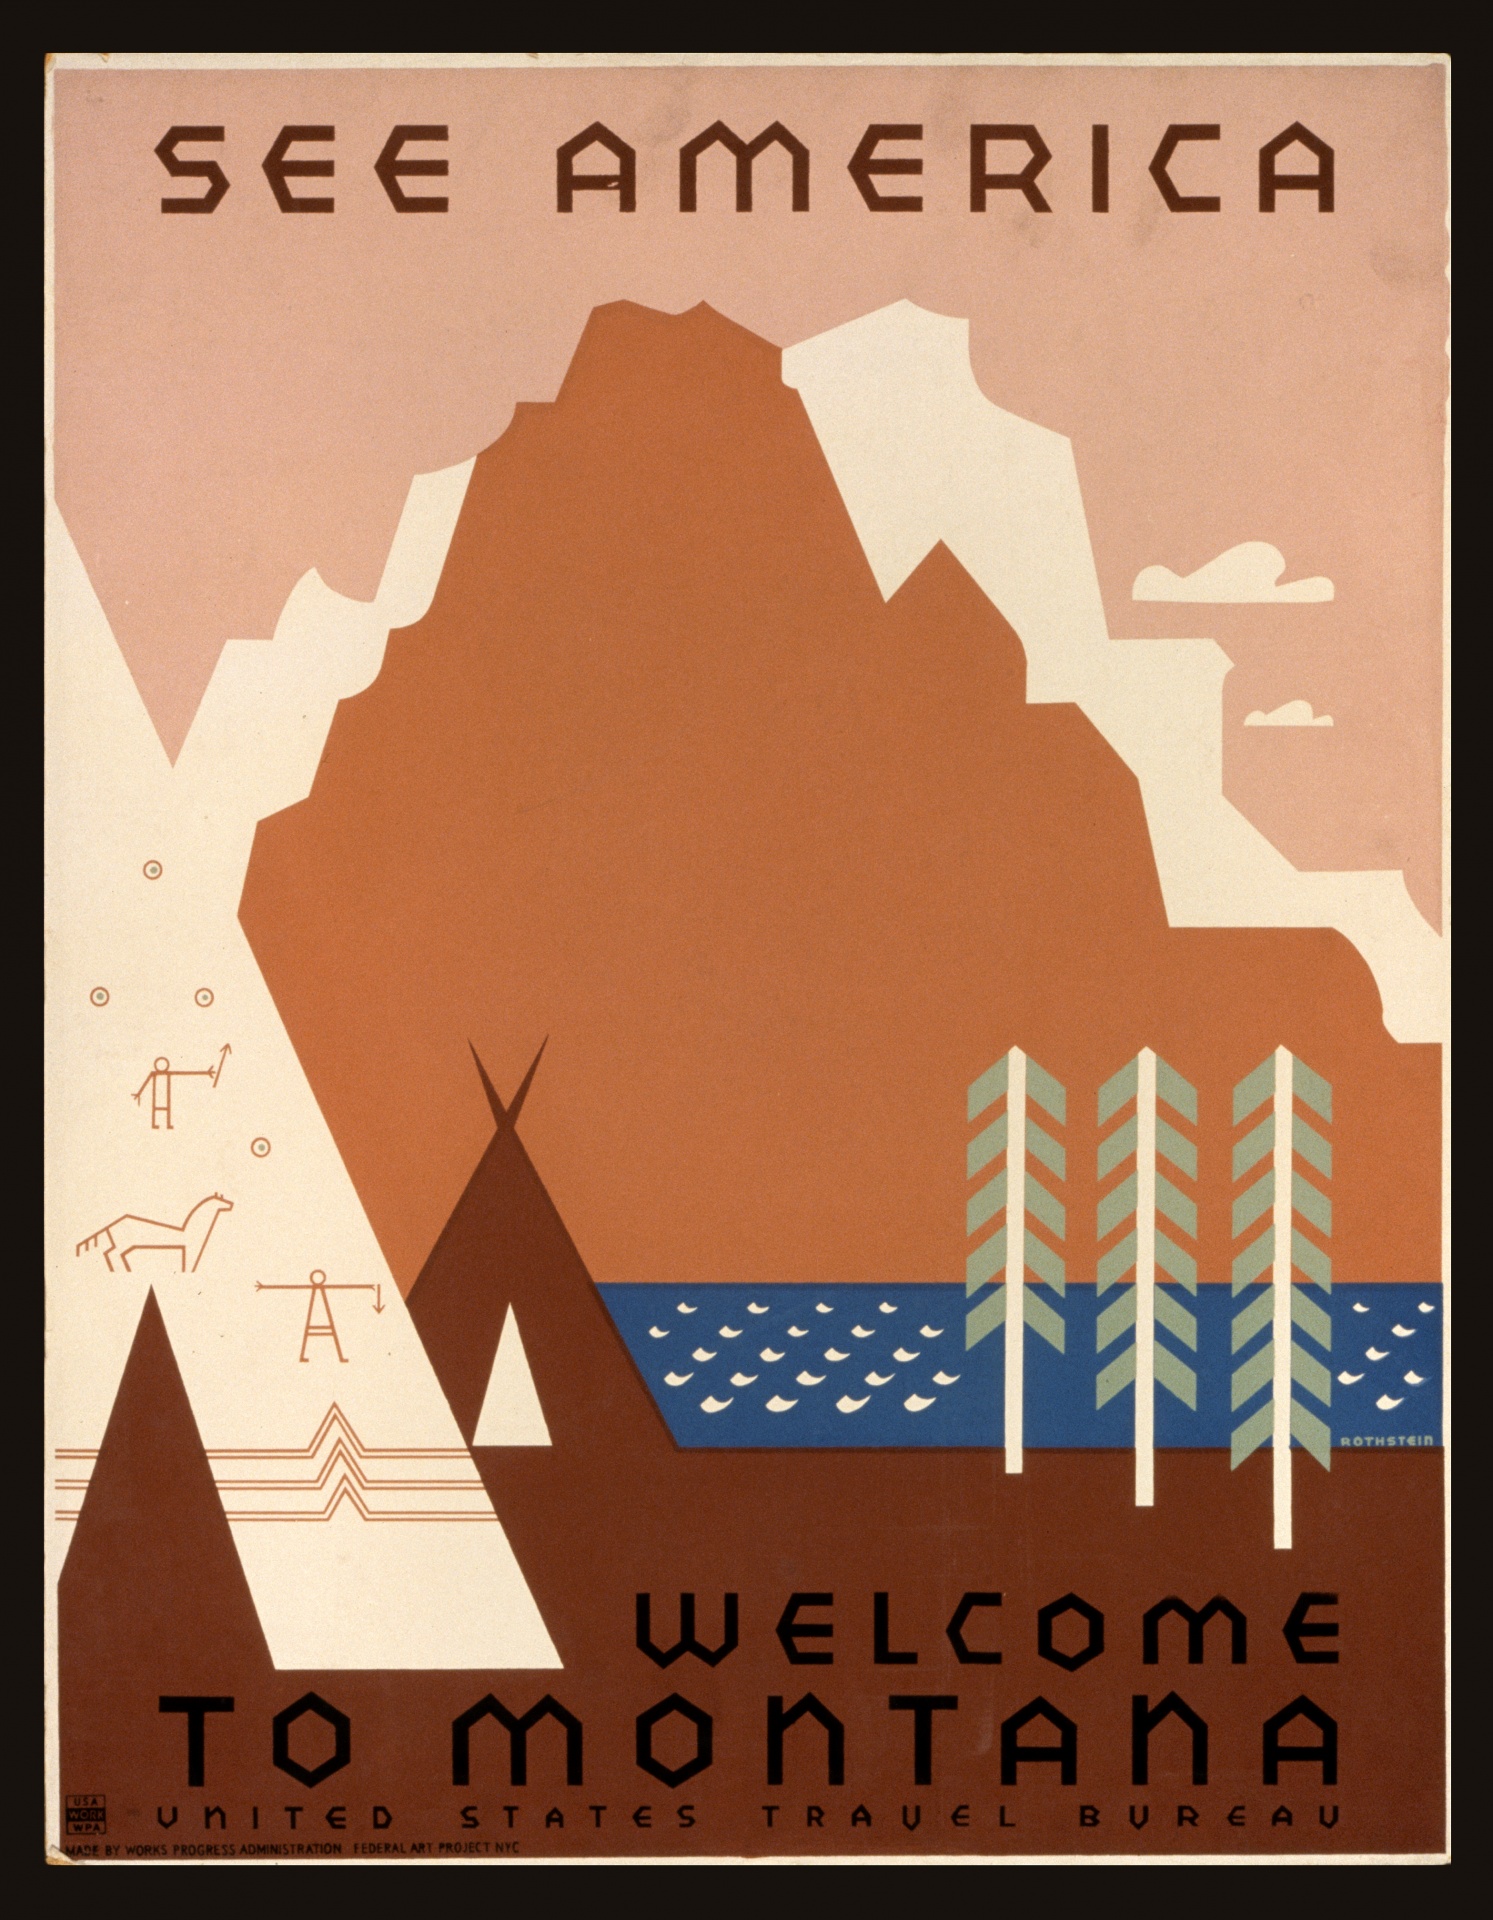 Montana Travel Poster